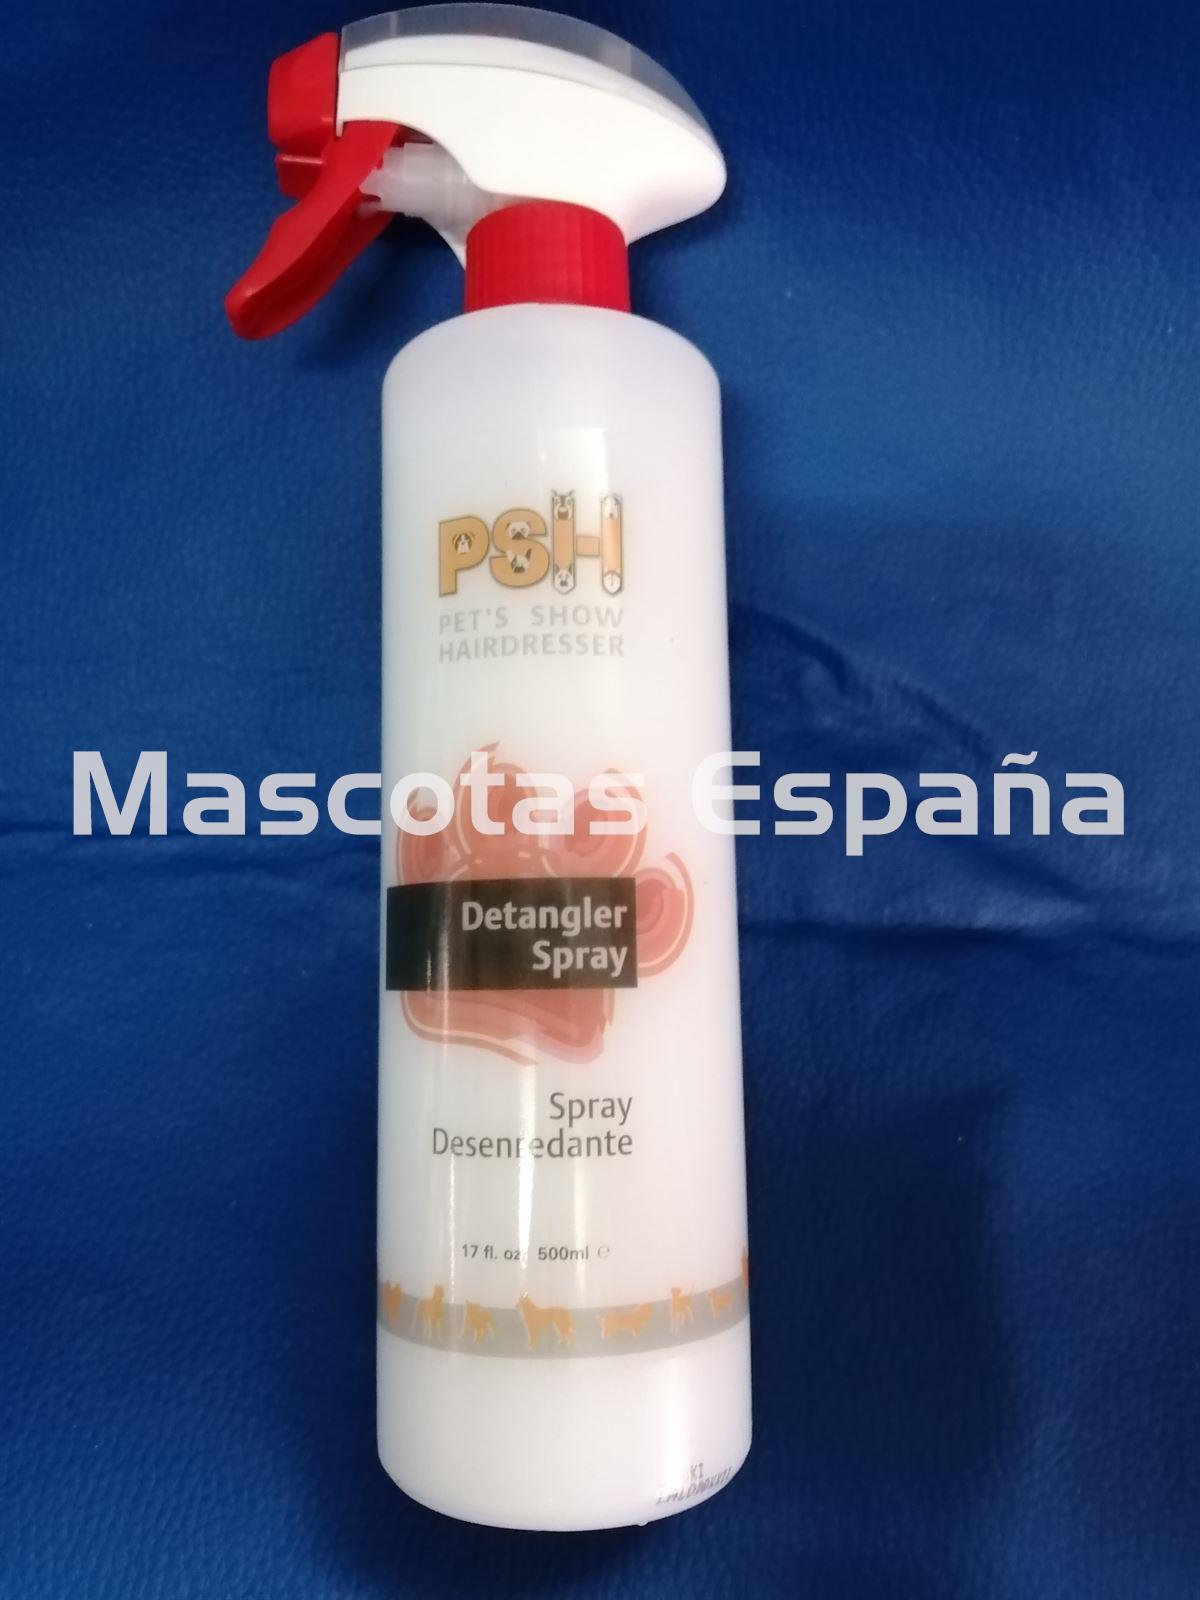 PSH Detangler Spray (Spray Desenredante) 500ml - Imagen 1